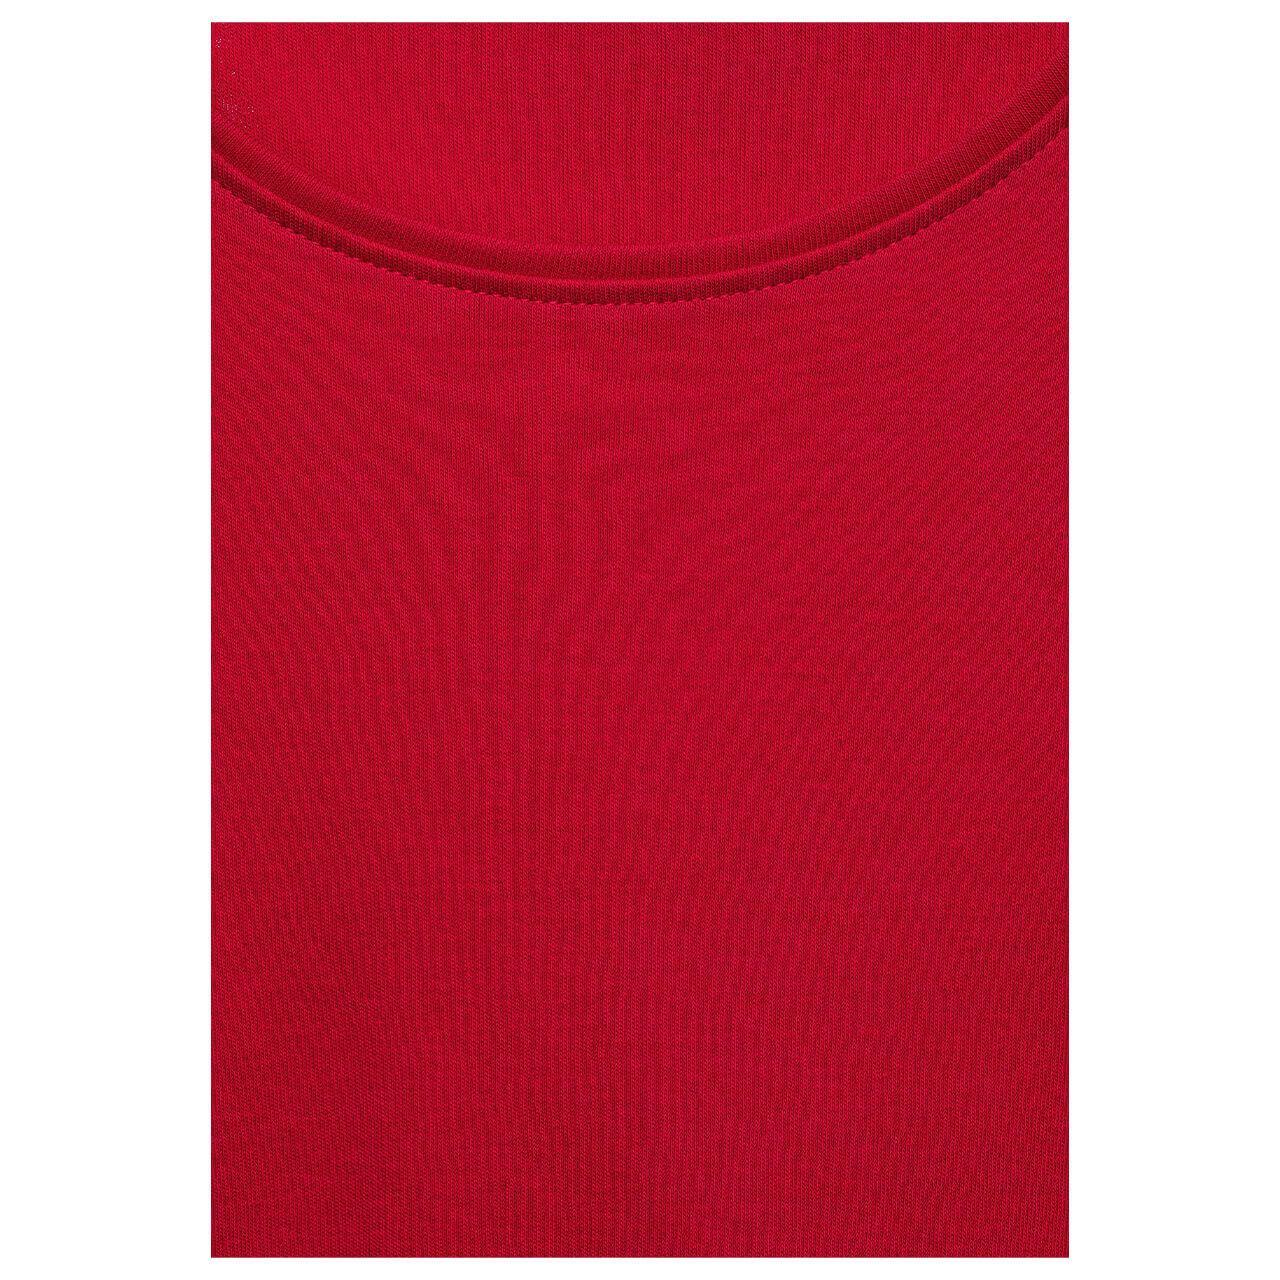 Cecil Pia Langarm Shirt für Damen in Kirschrot, FarbNr.: 13541